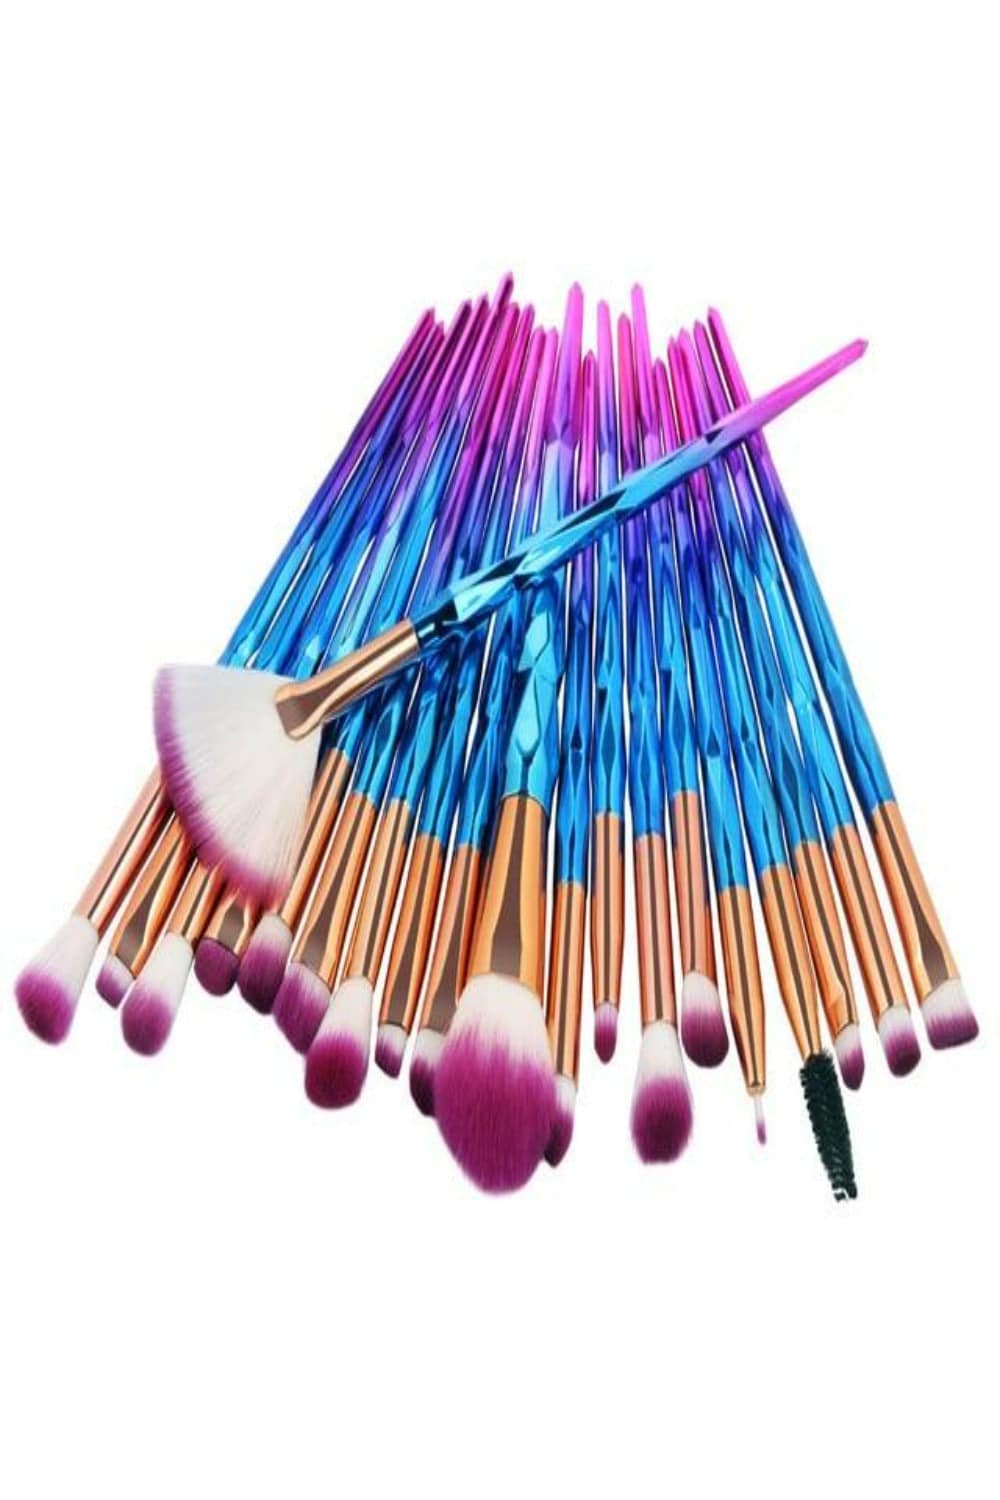 Diamond Makeup Blending Brushes Set - 20 Pcs - TGC Boutique - Makeup Brushes